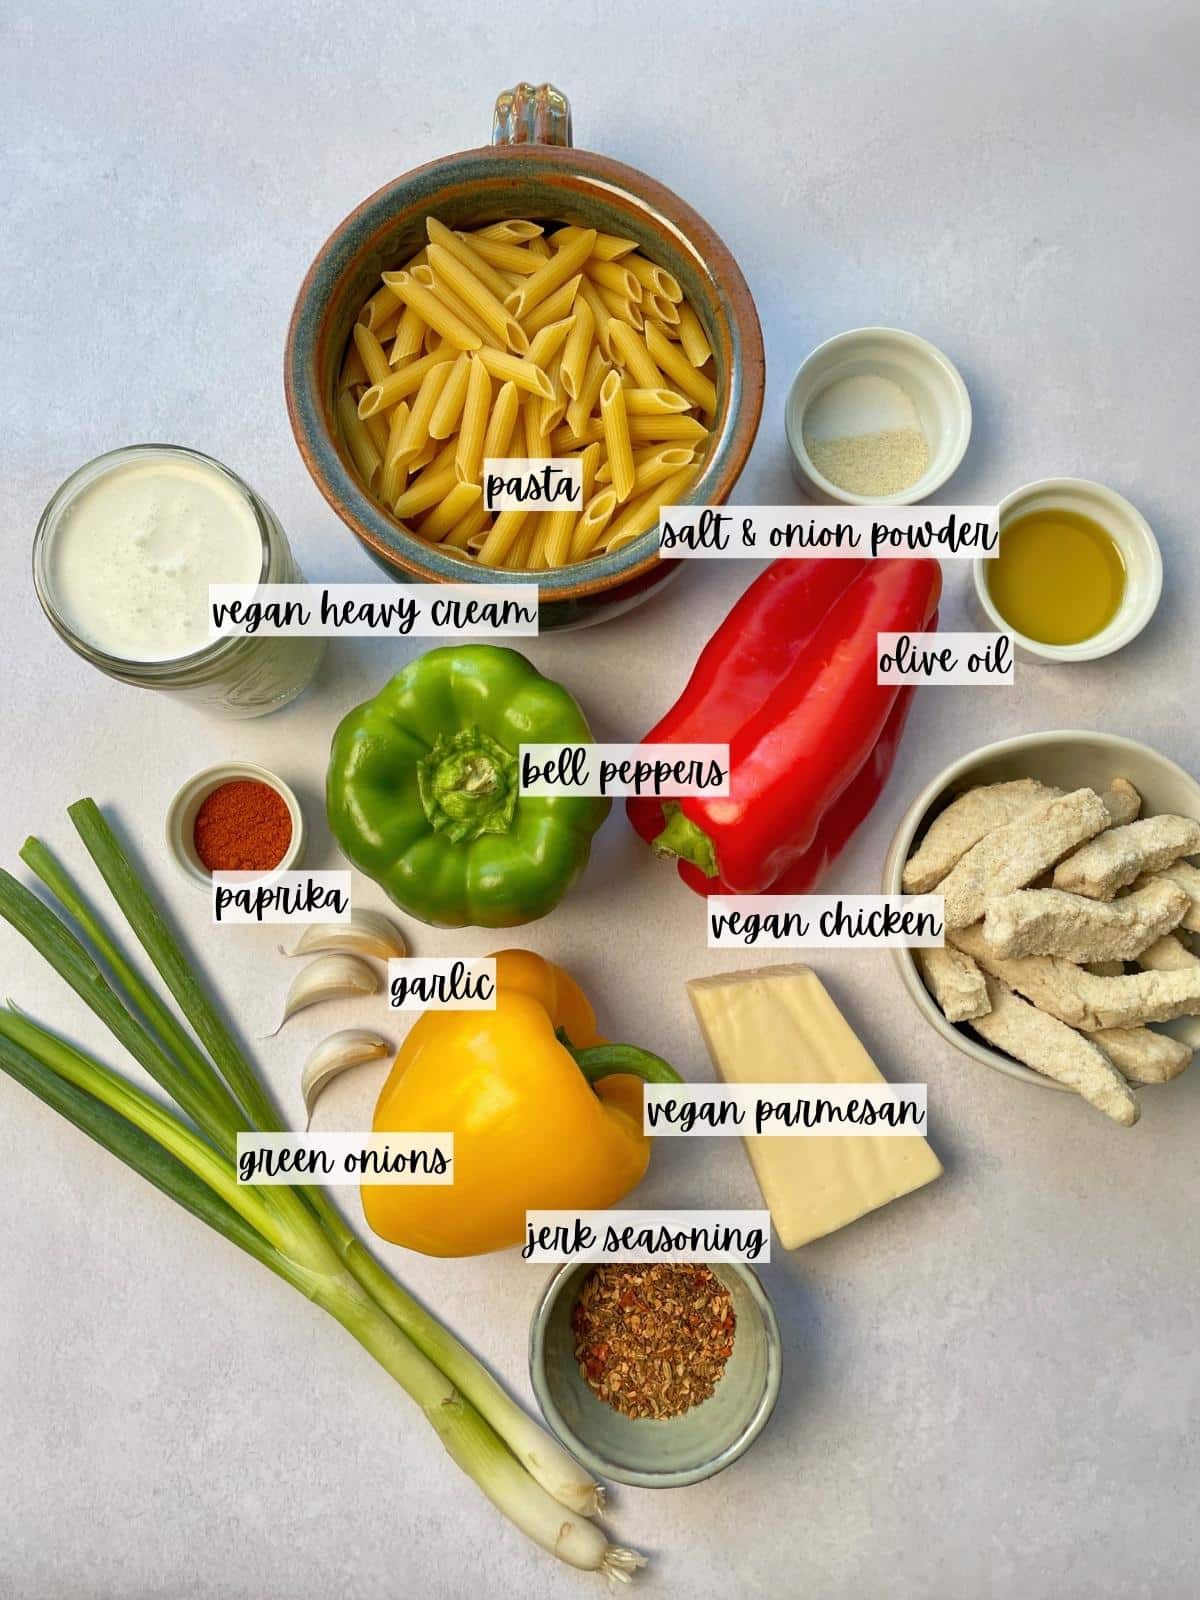 Labeled ingredients for rasta pasta.